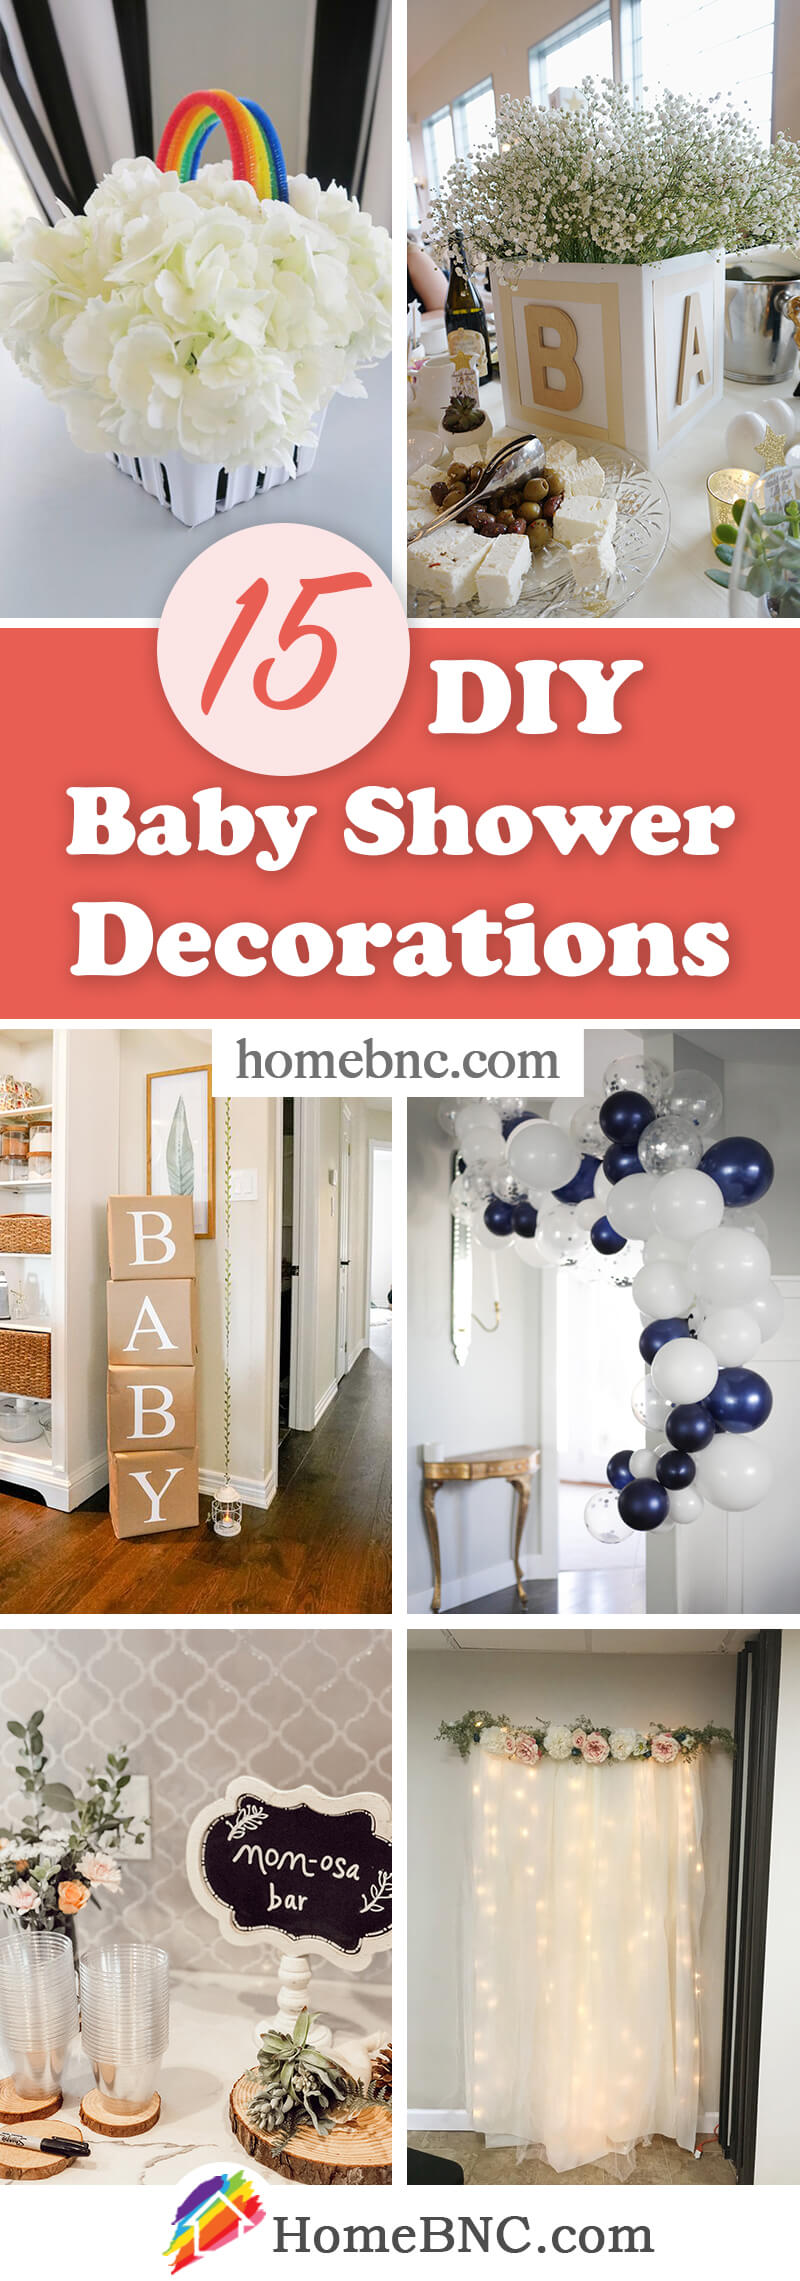 15 Best Diy Baby Shower Decorations